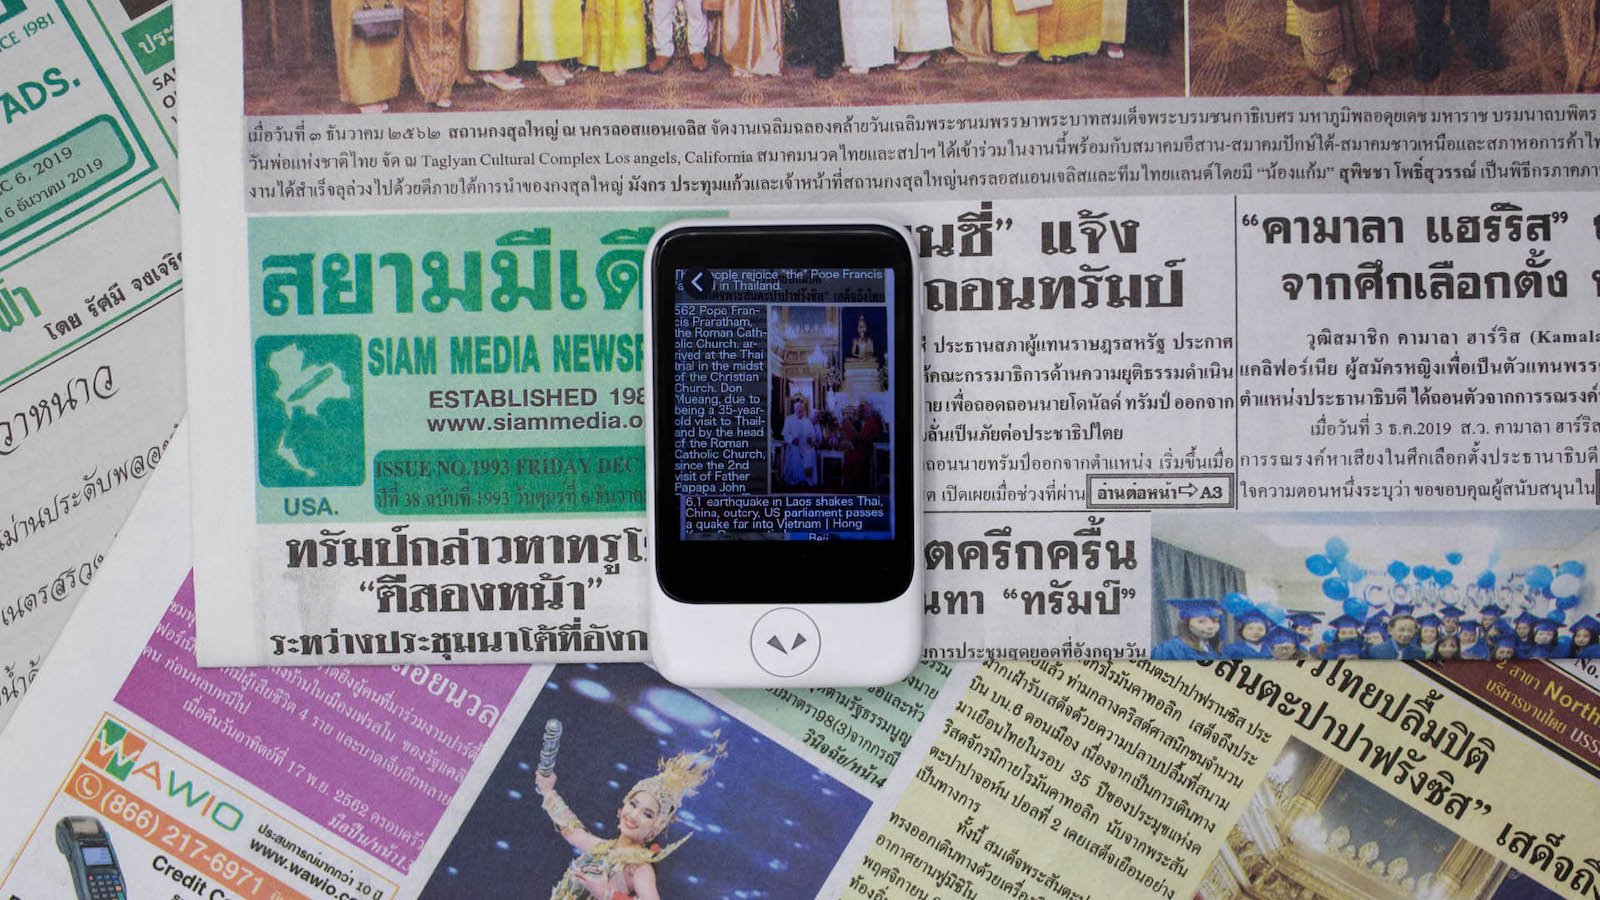 Pocketalk Plus handheld translator offers 2-way translation of 82 languages & dialects